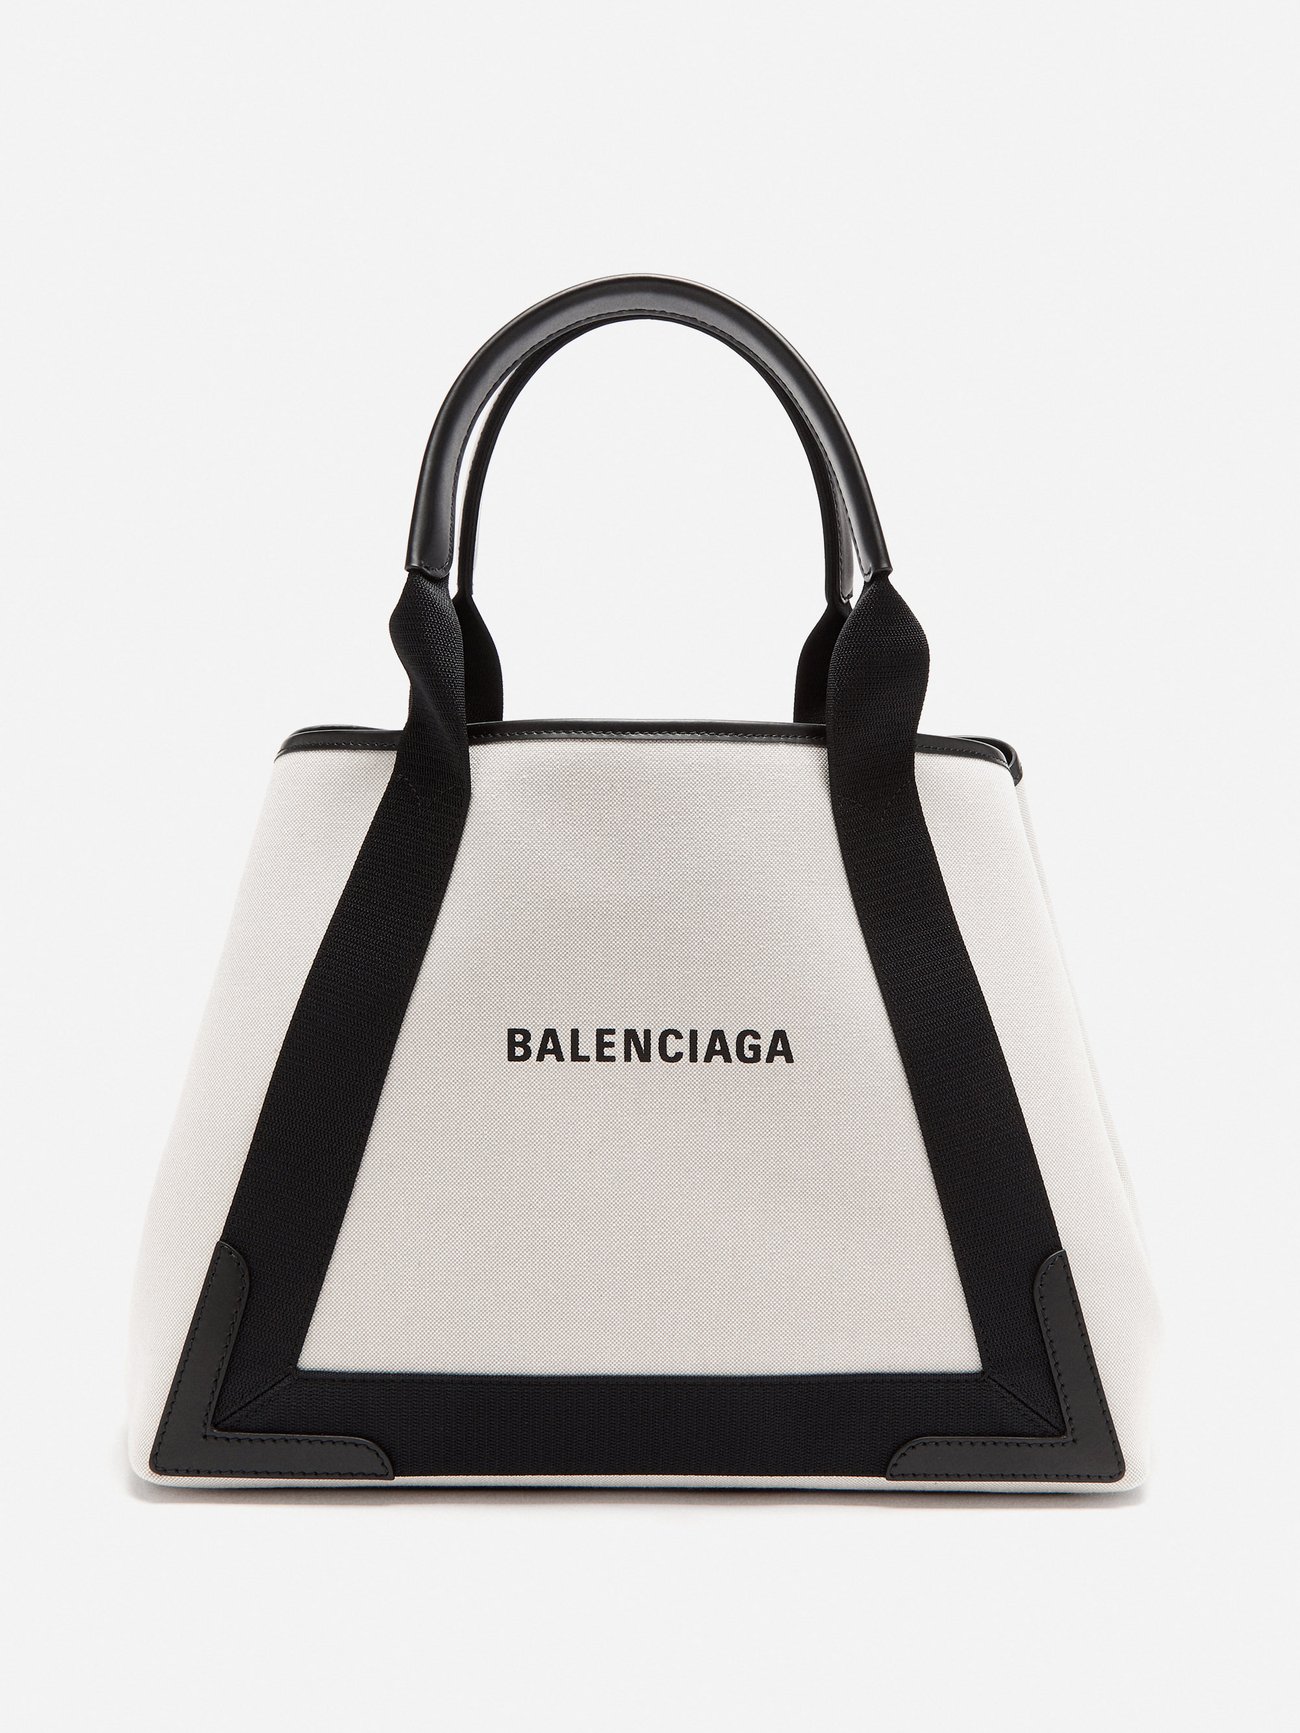 Take a Look at Demna Gvasalia's First Handbags as Creative